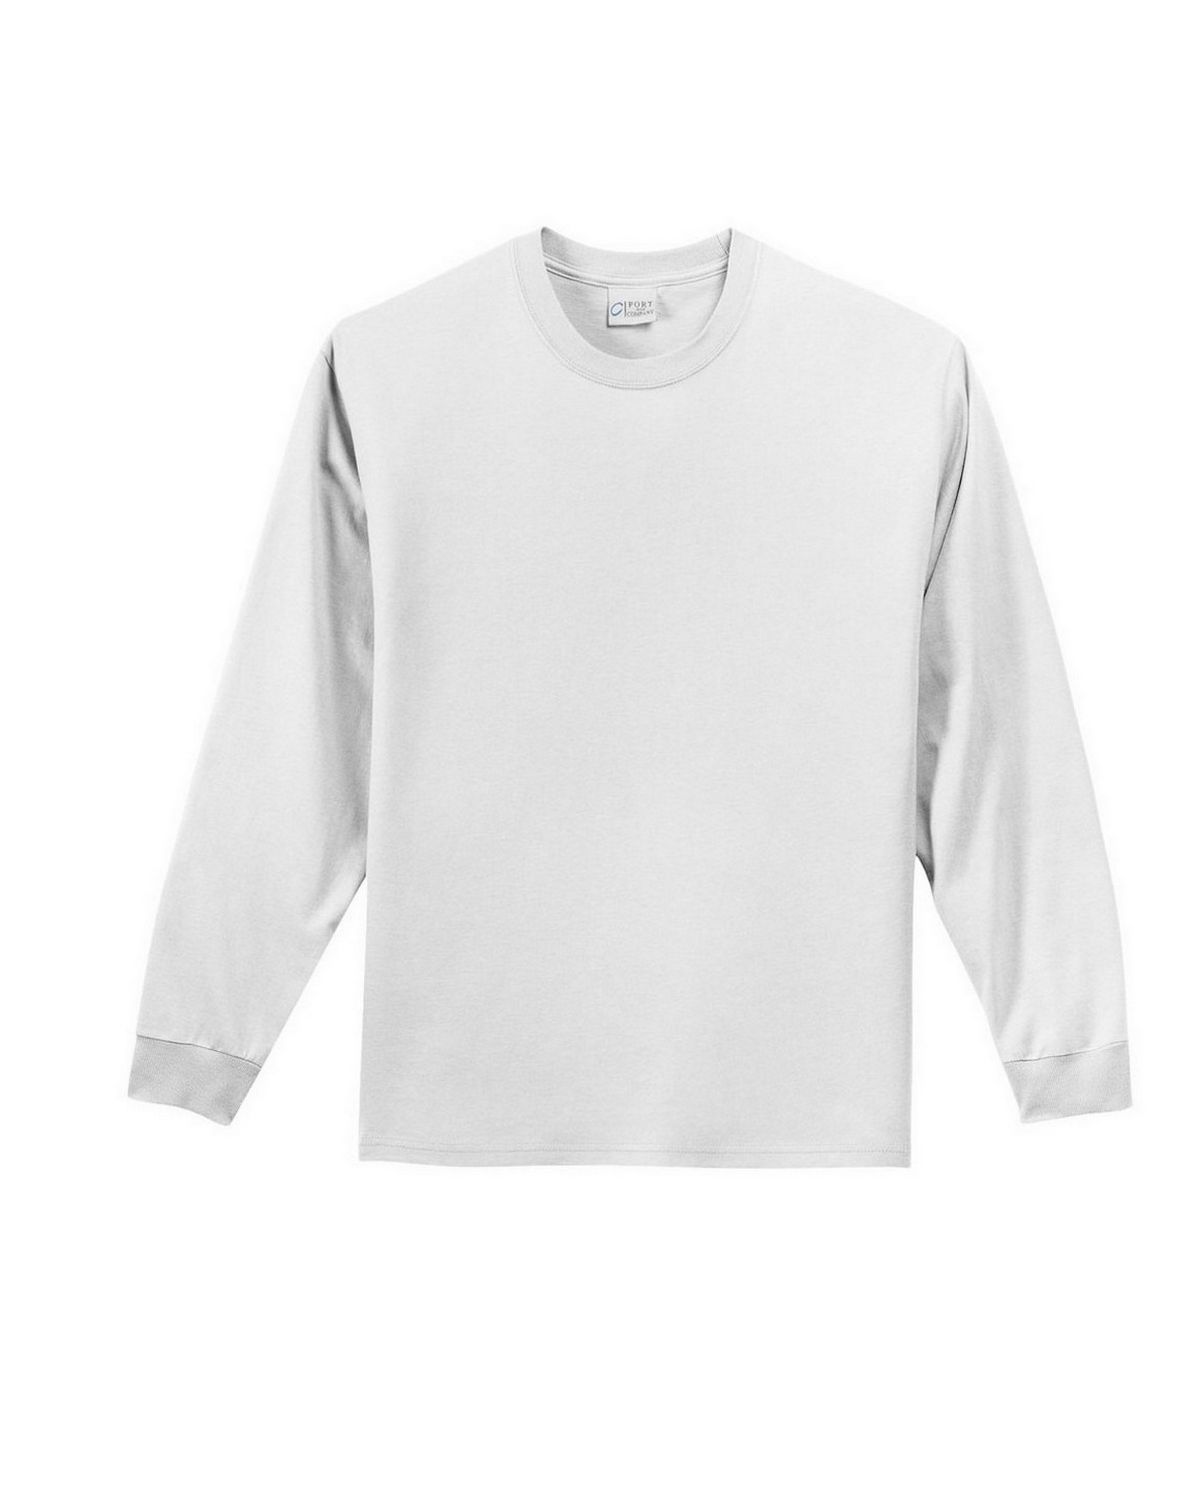 Port & Company Long Sleeve Essential T-Shirt. 